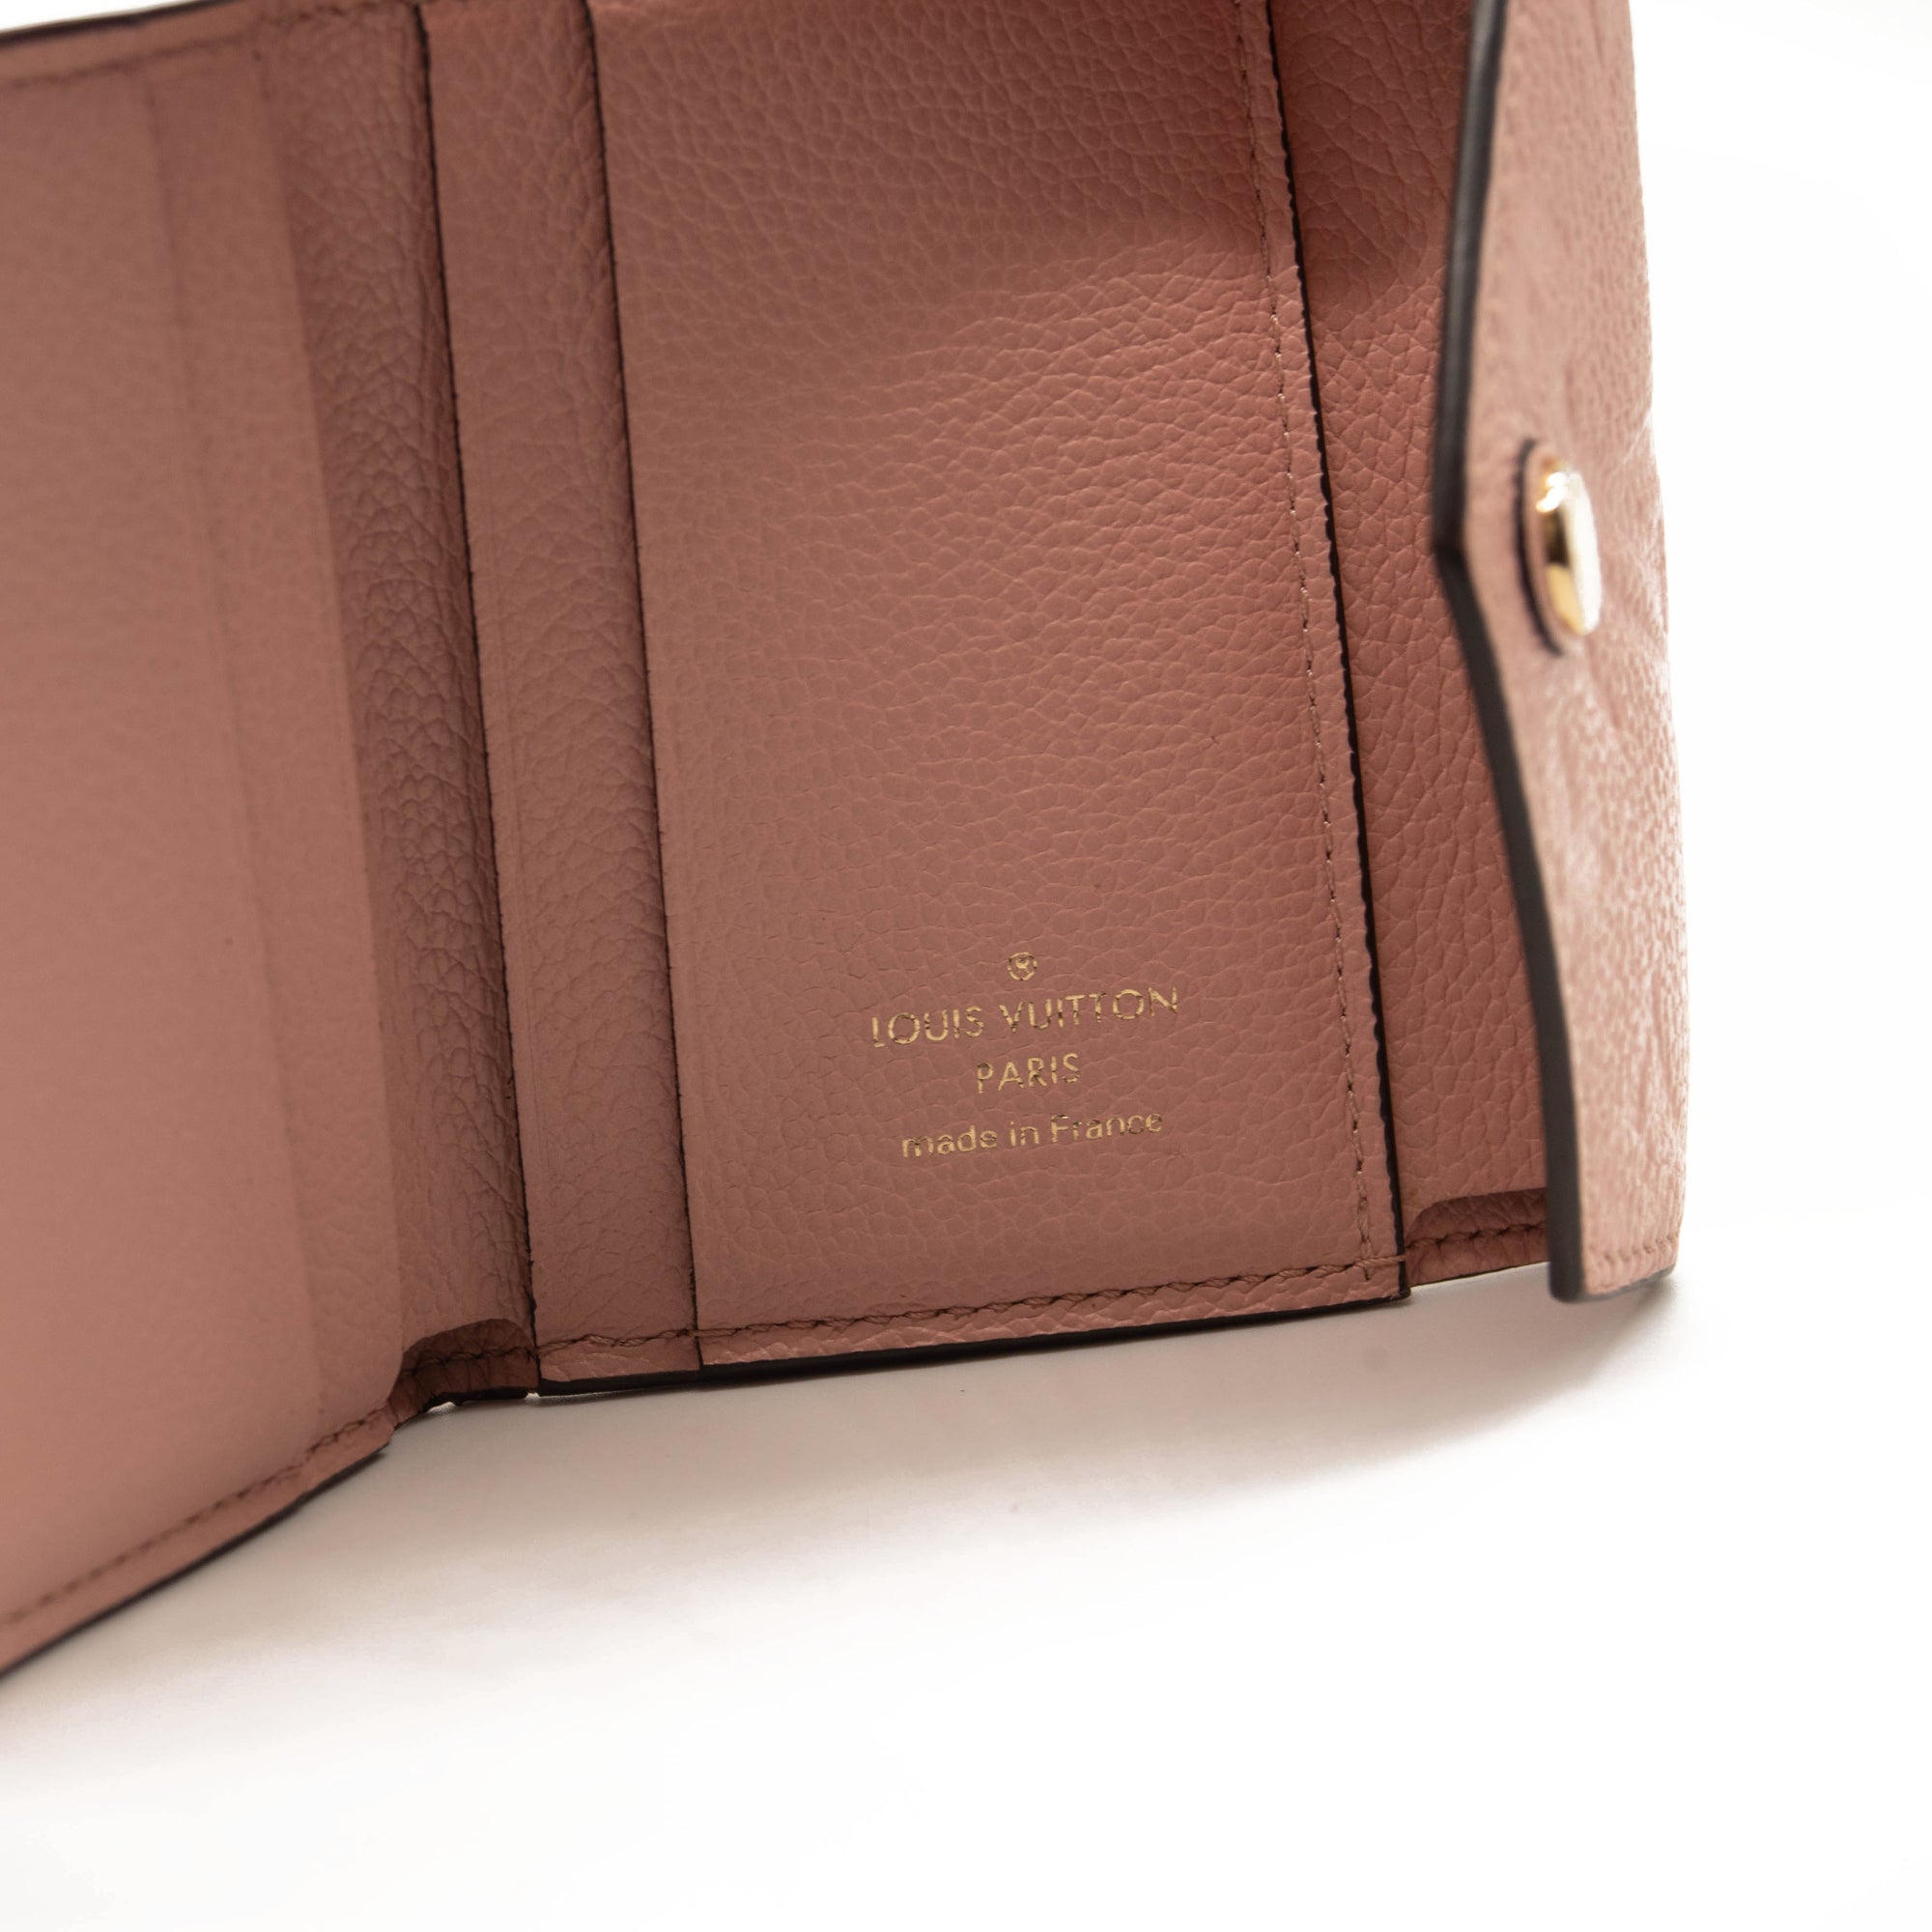 Louis Vuitton Empreinte Zoe Wallet Review in Rose Poudre!!! 